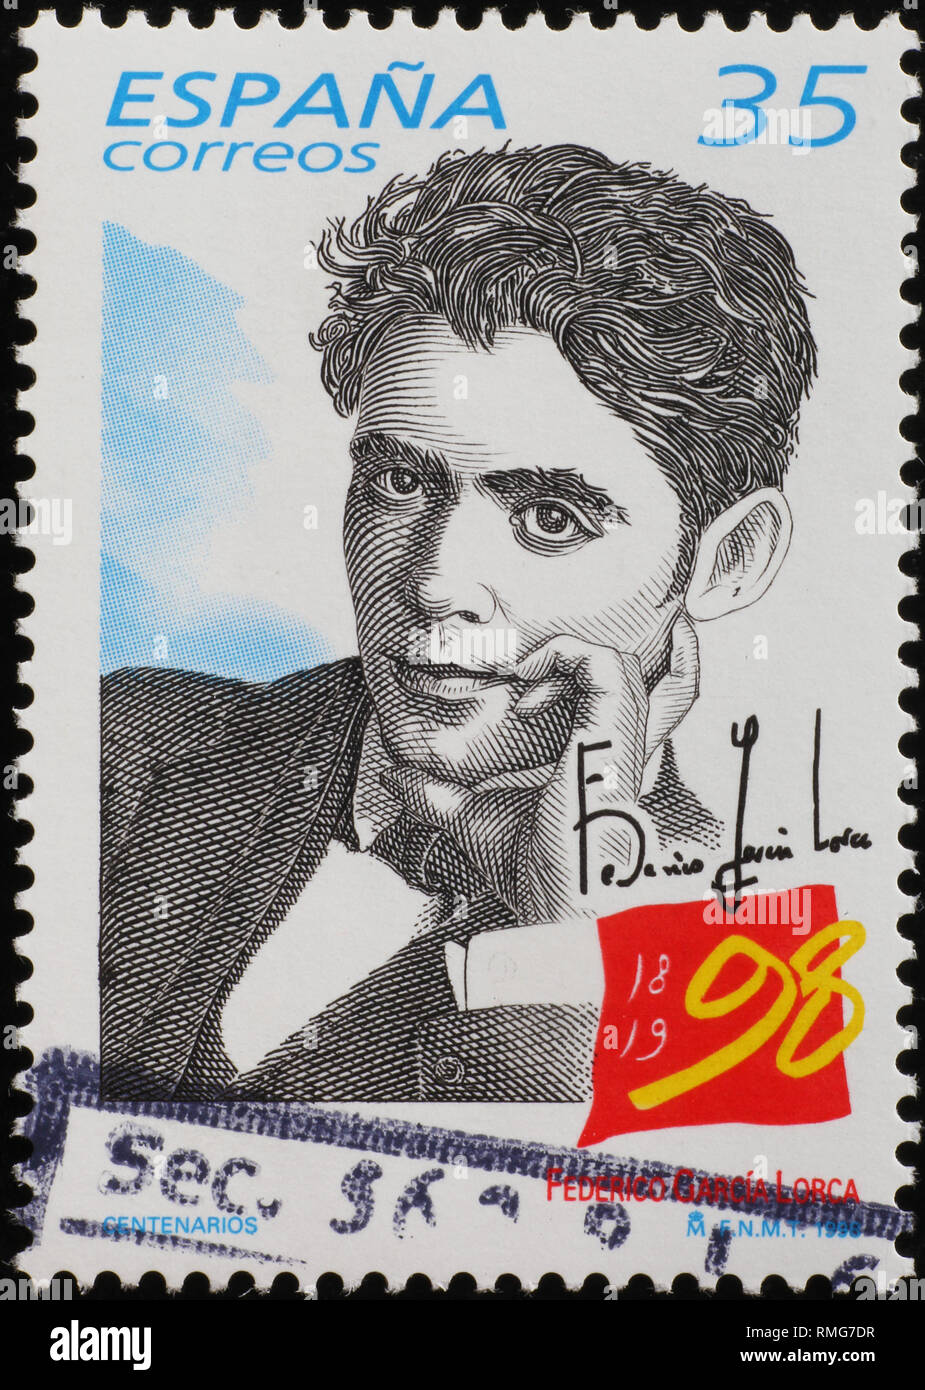 Federico Garcia Lorca on spanish postage stamp Stock Photo